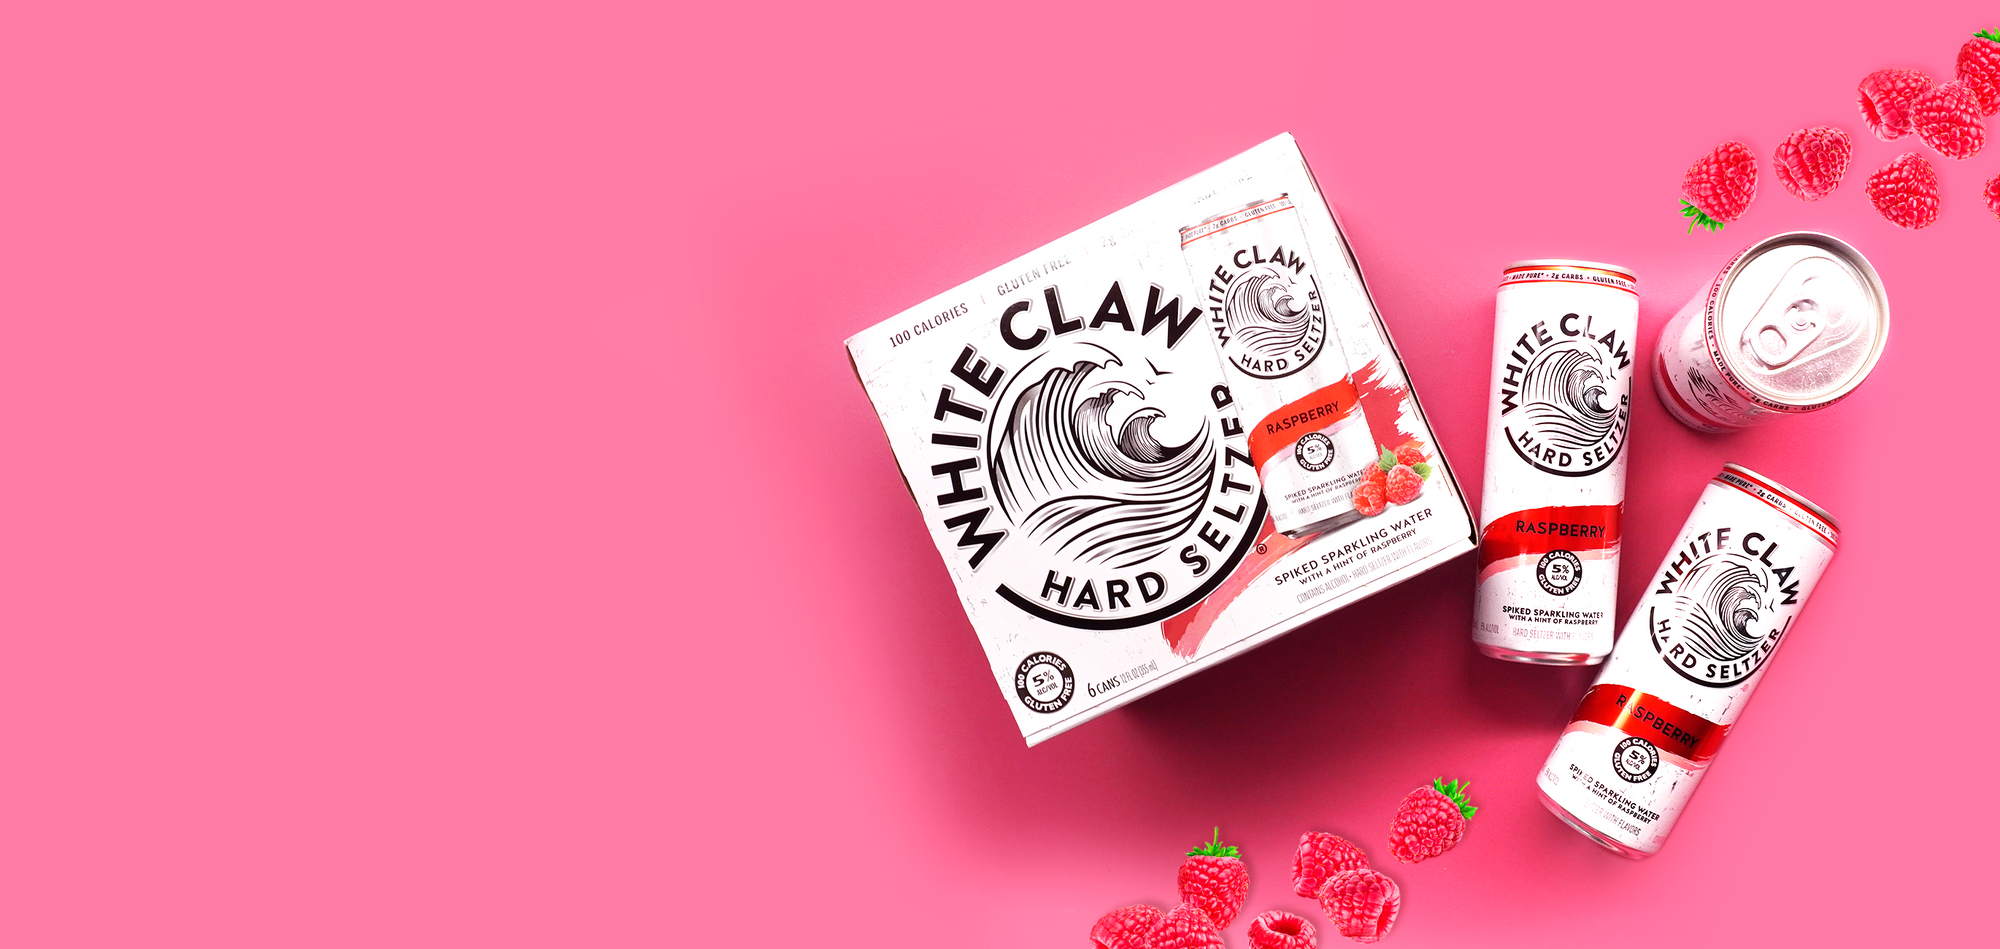 White Claw Raspberry Hard Seltzer